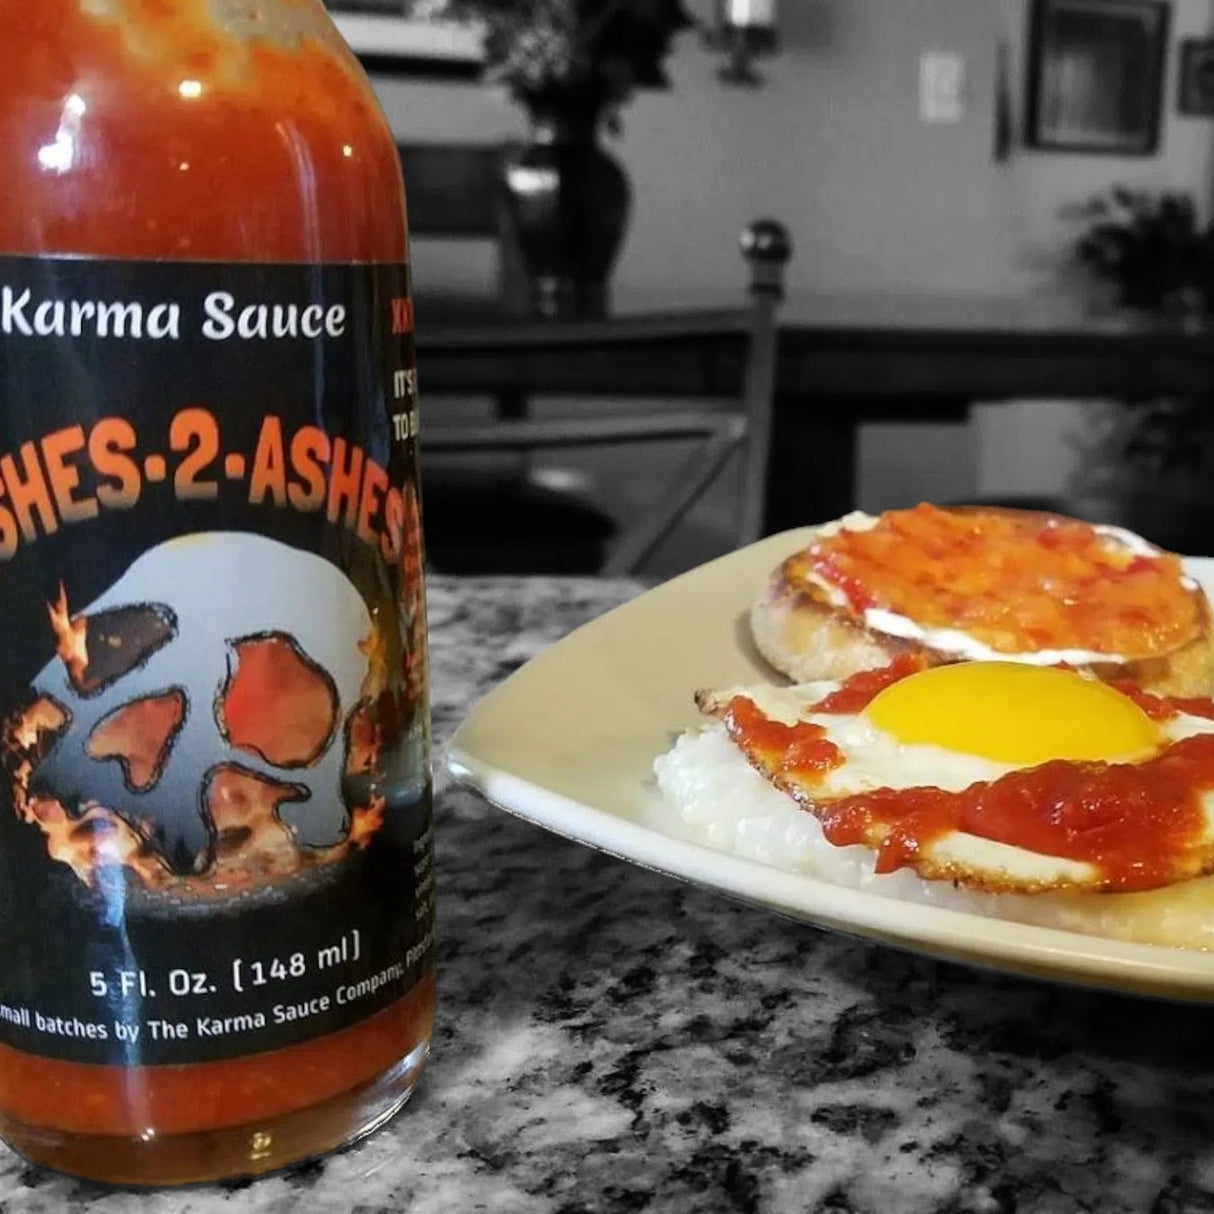 Karma Sauce - Ashes-2-Ashes Hot Sauce